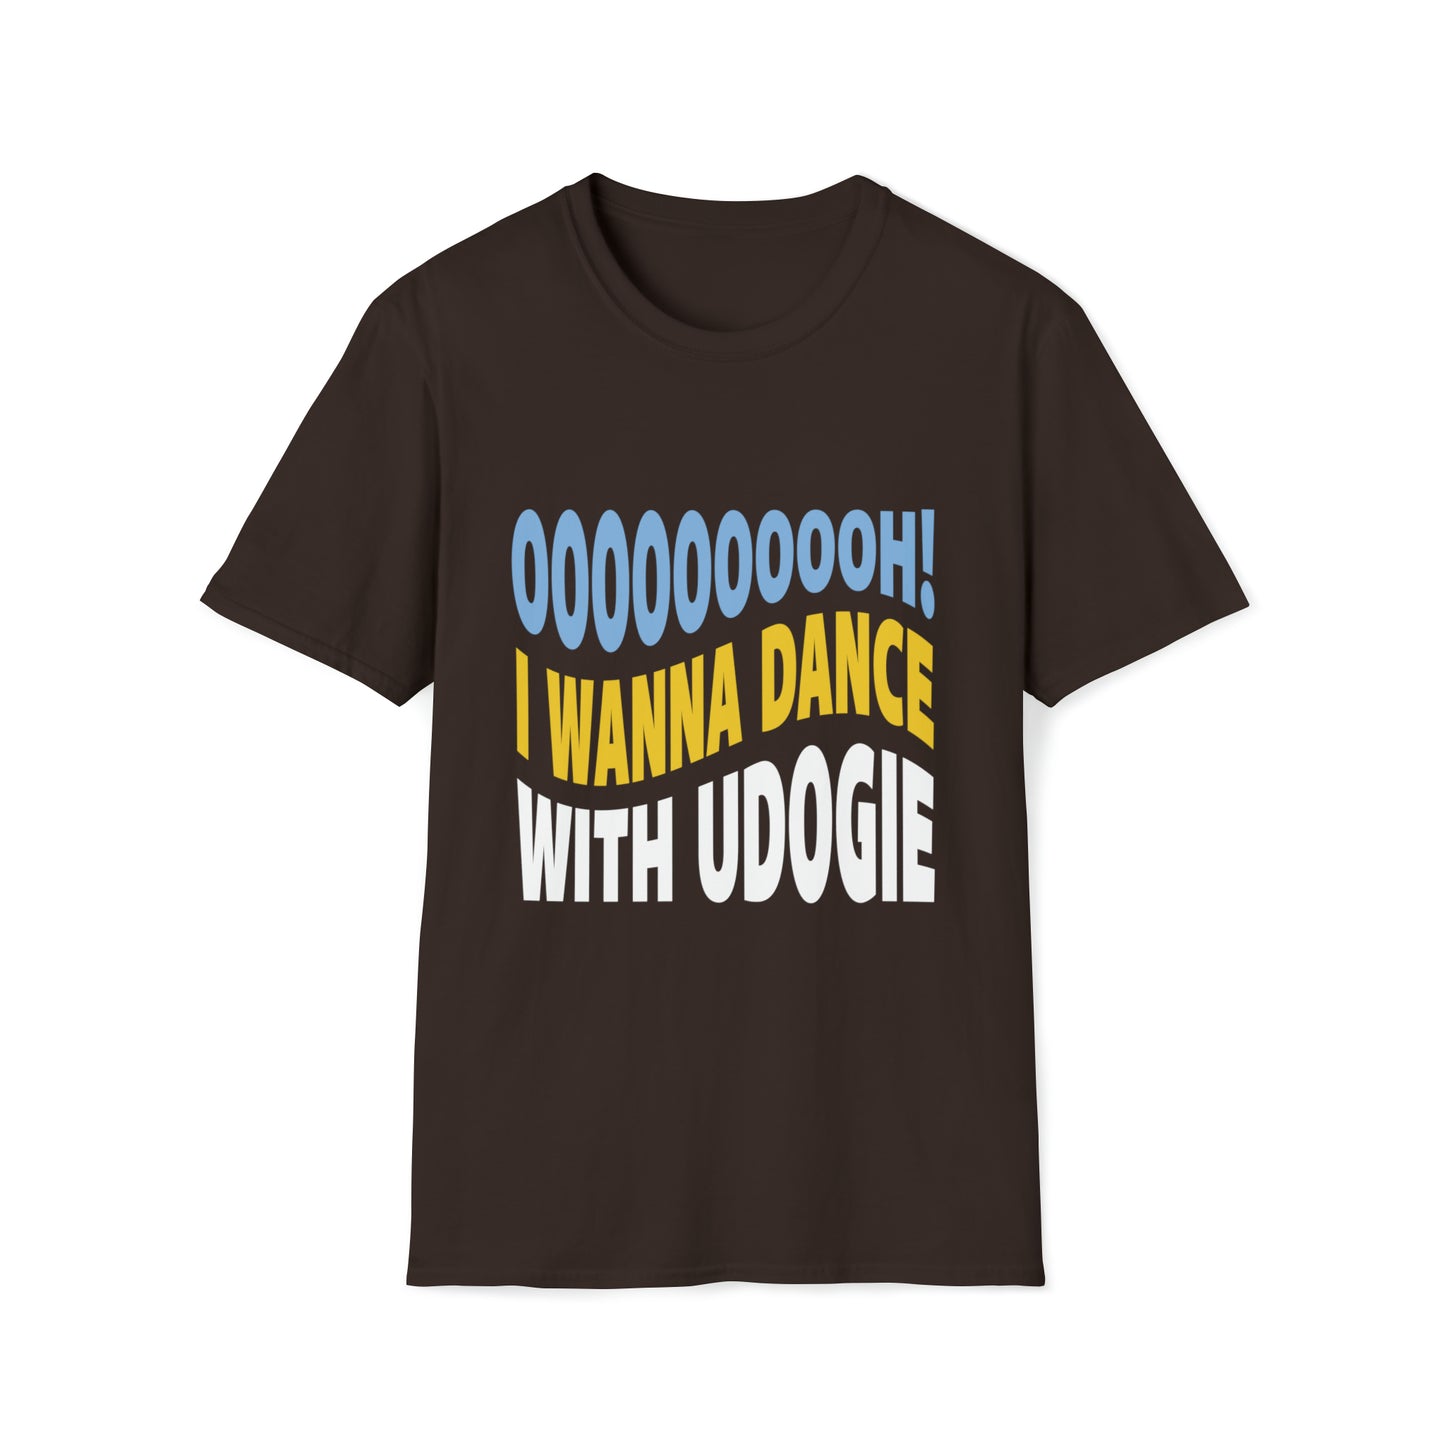 I Wanna Dance With Udogie